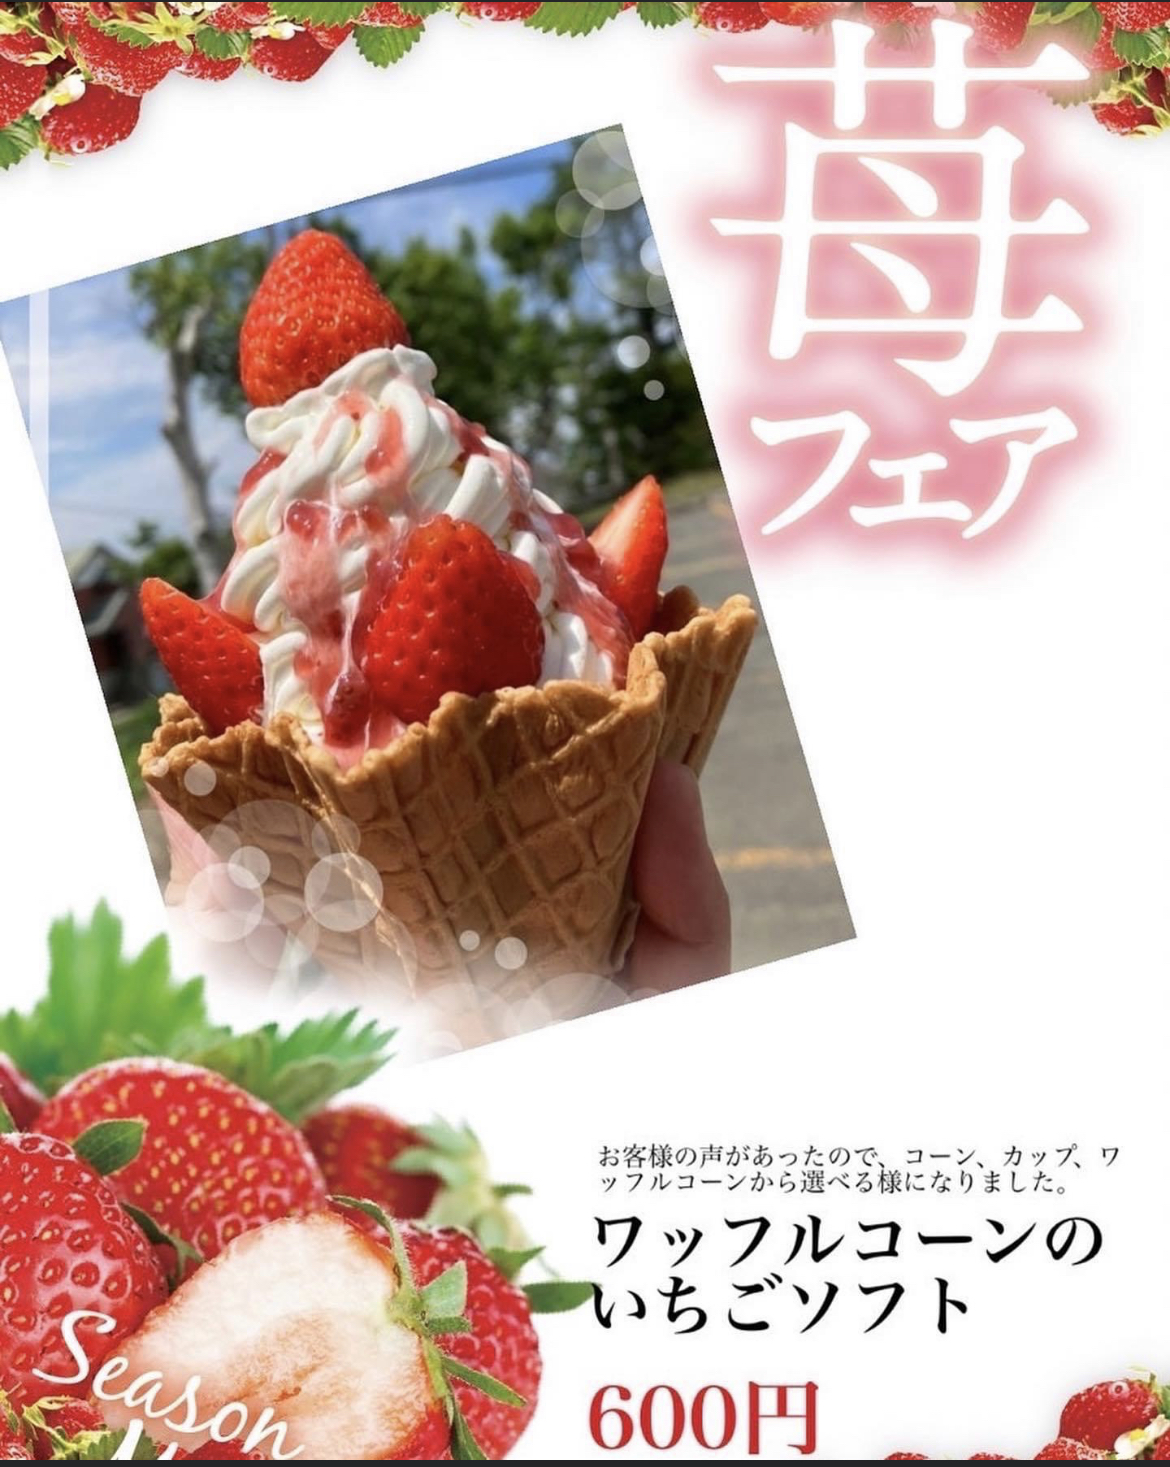 strawberry petit (ストロベリープティ) – 北新ケータリング